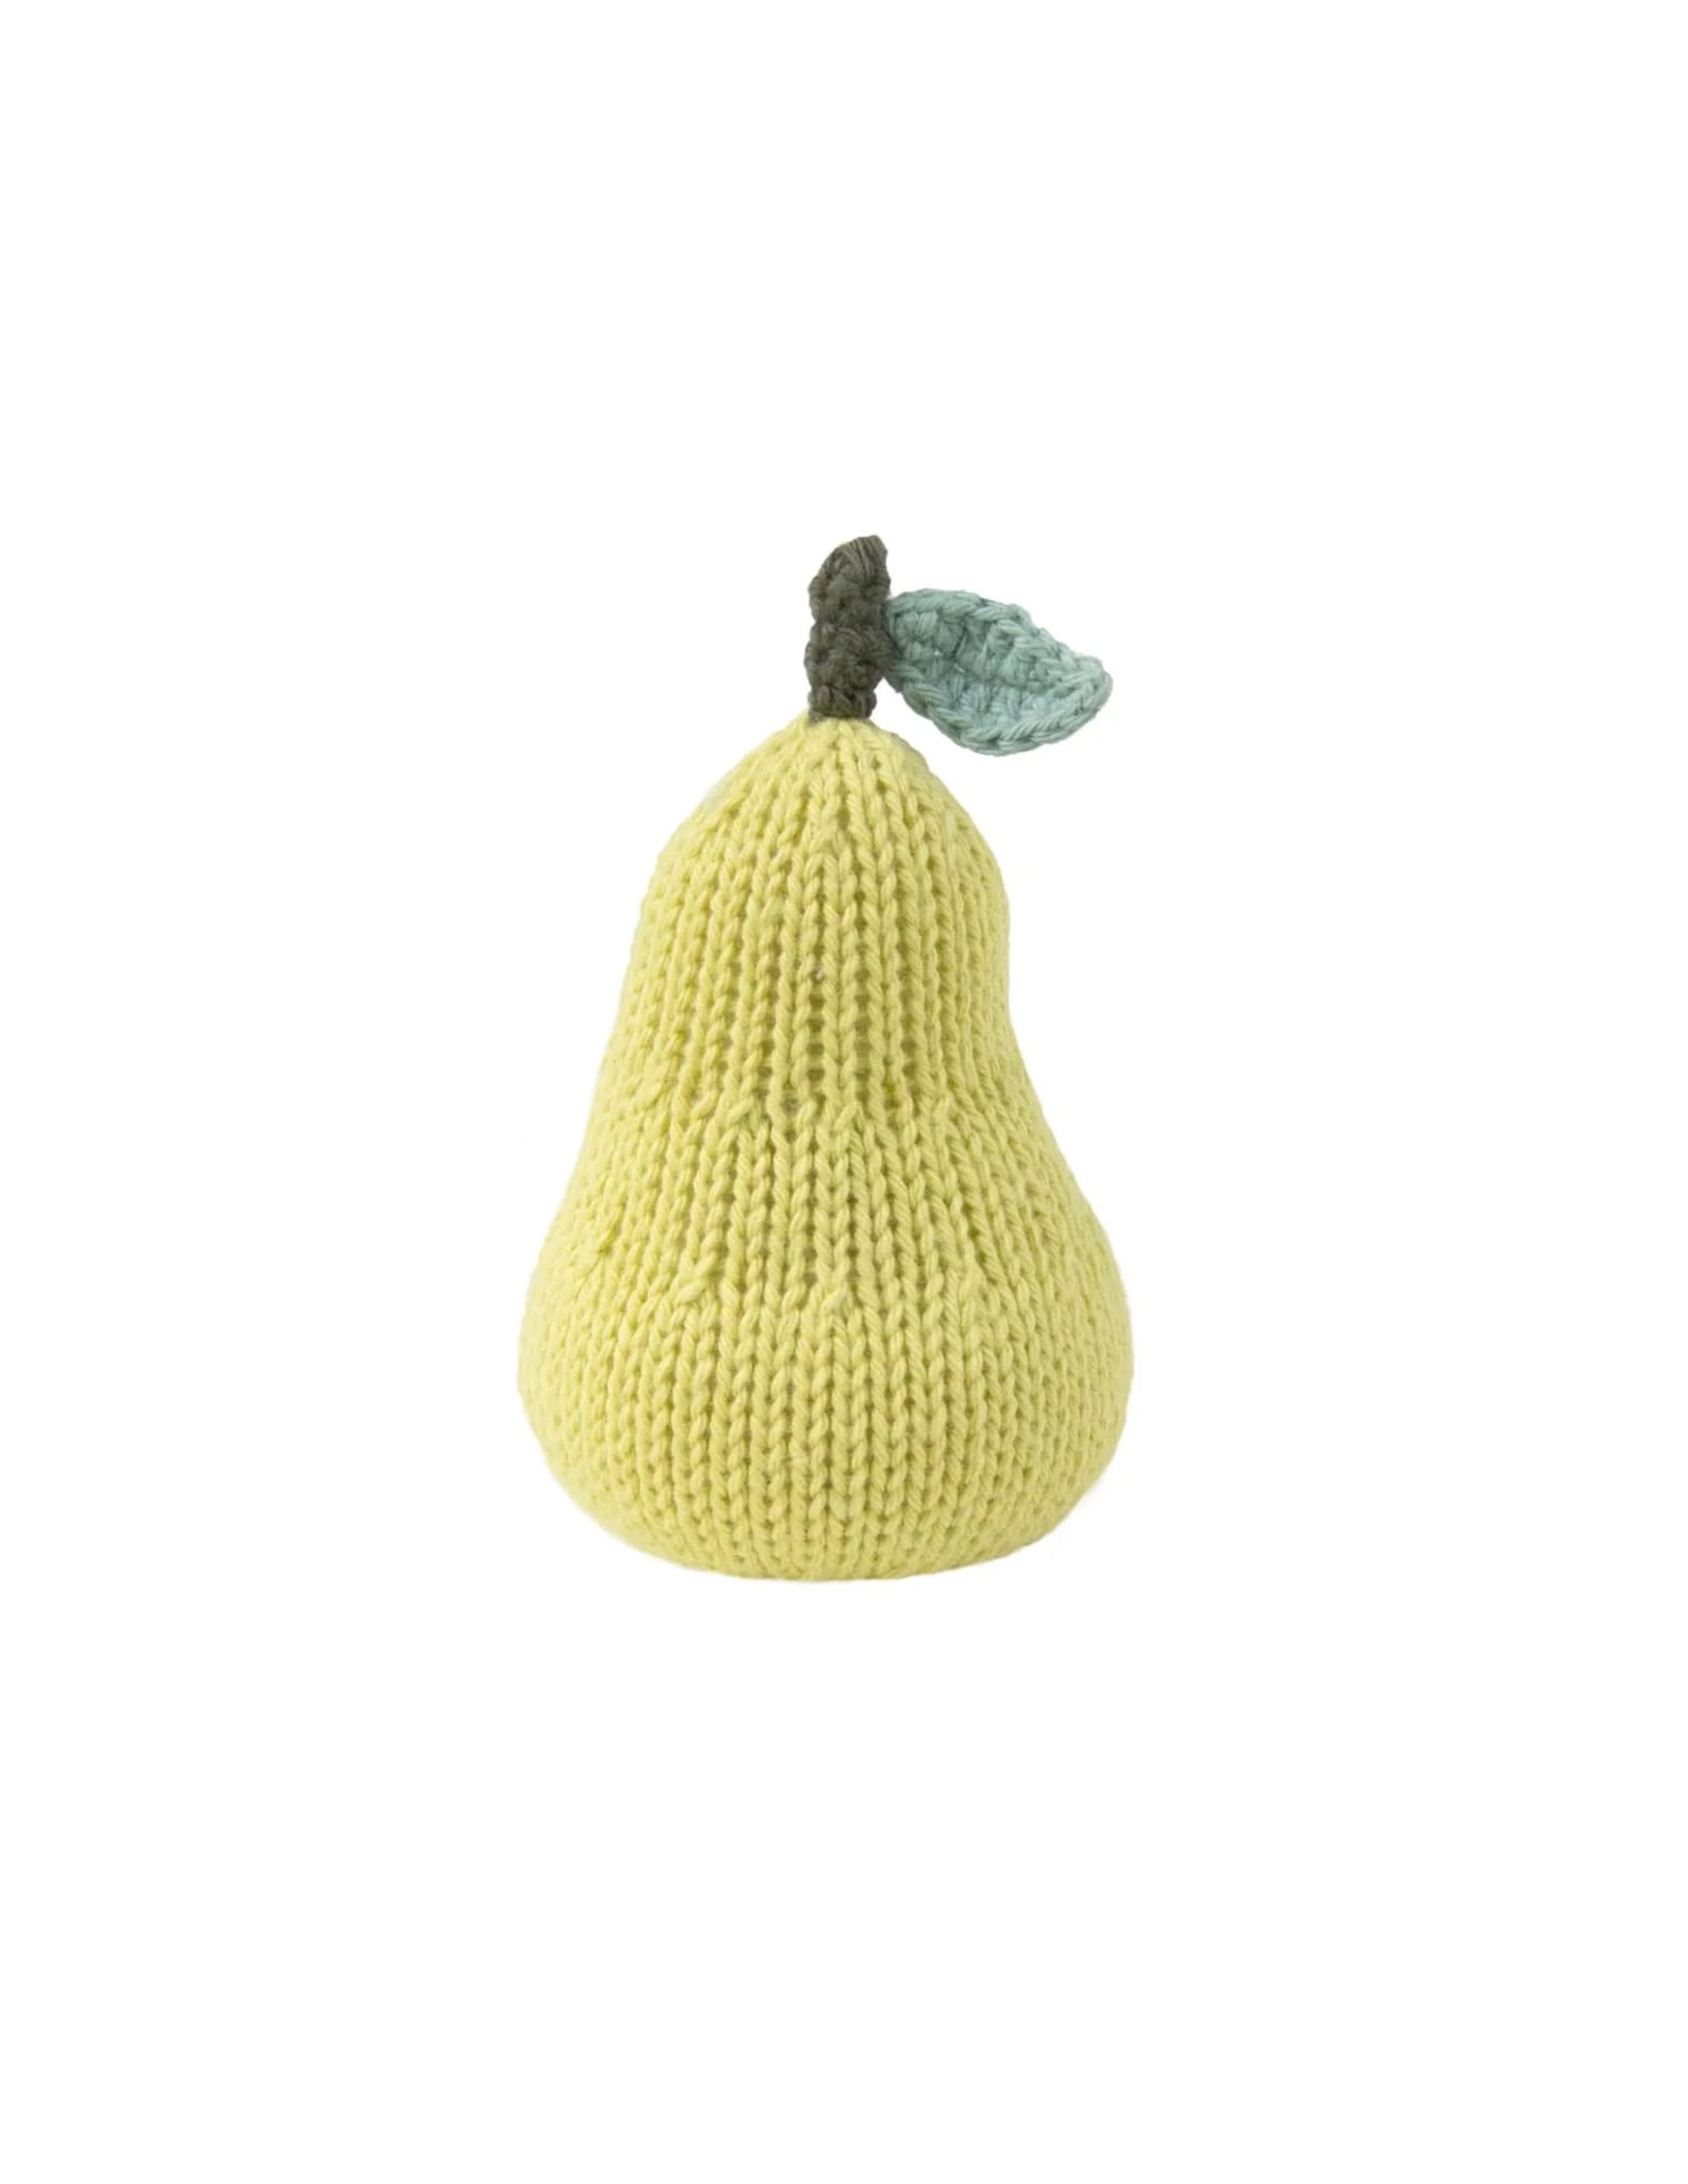 Pear Knit Rattle